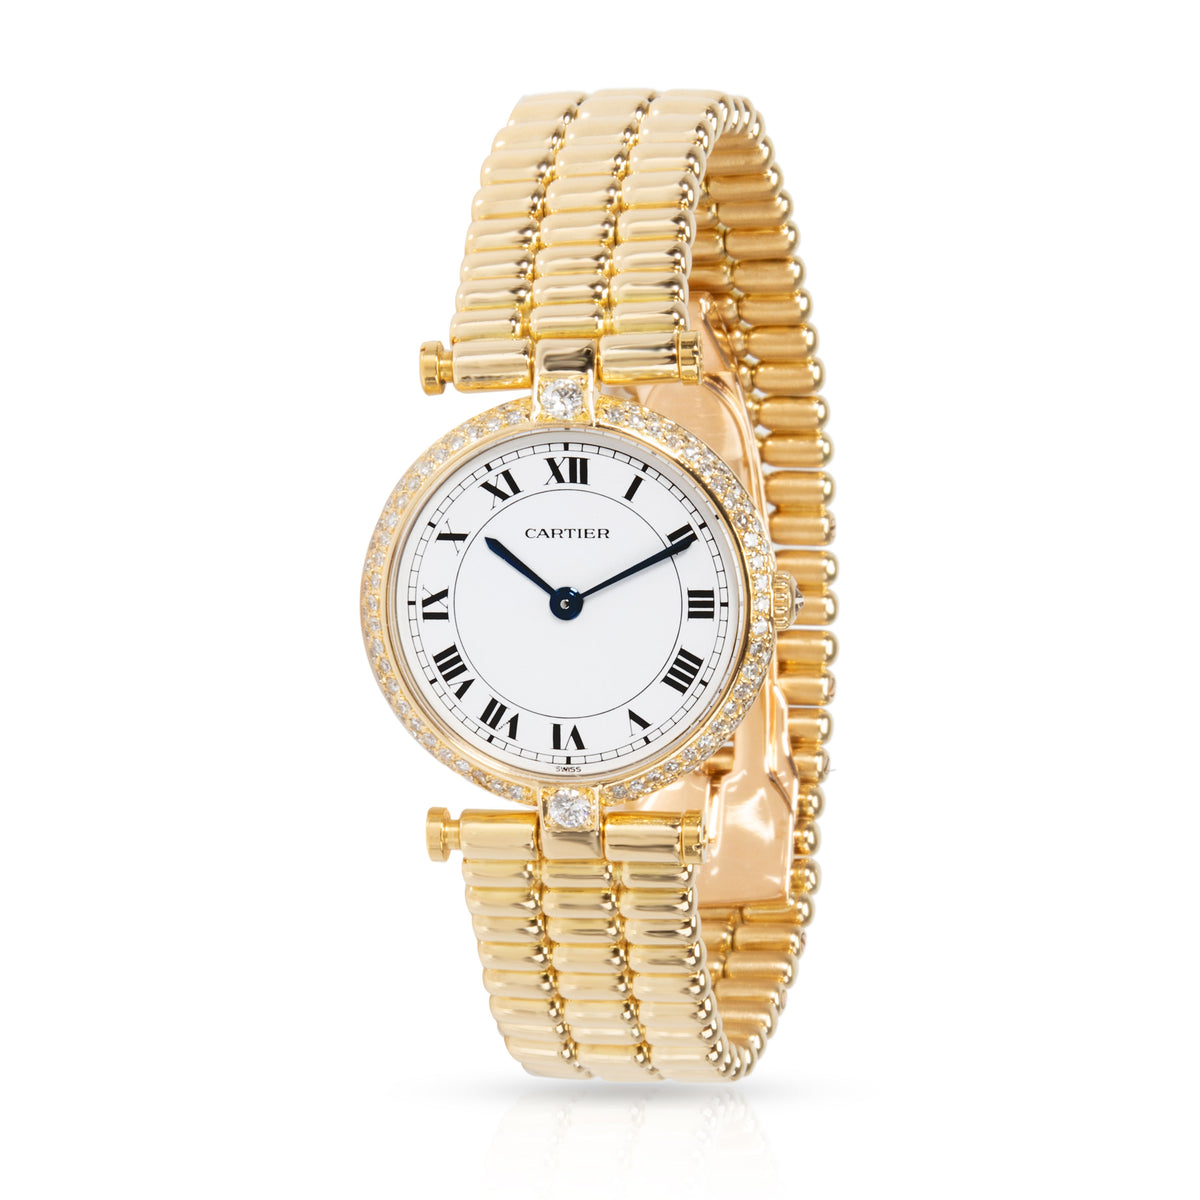 Cartier Vendome L.C. 8107 Women's Watch in 18kt Yellow Gold